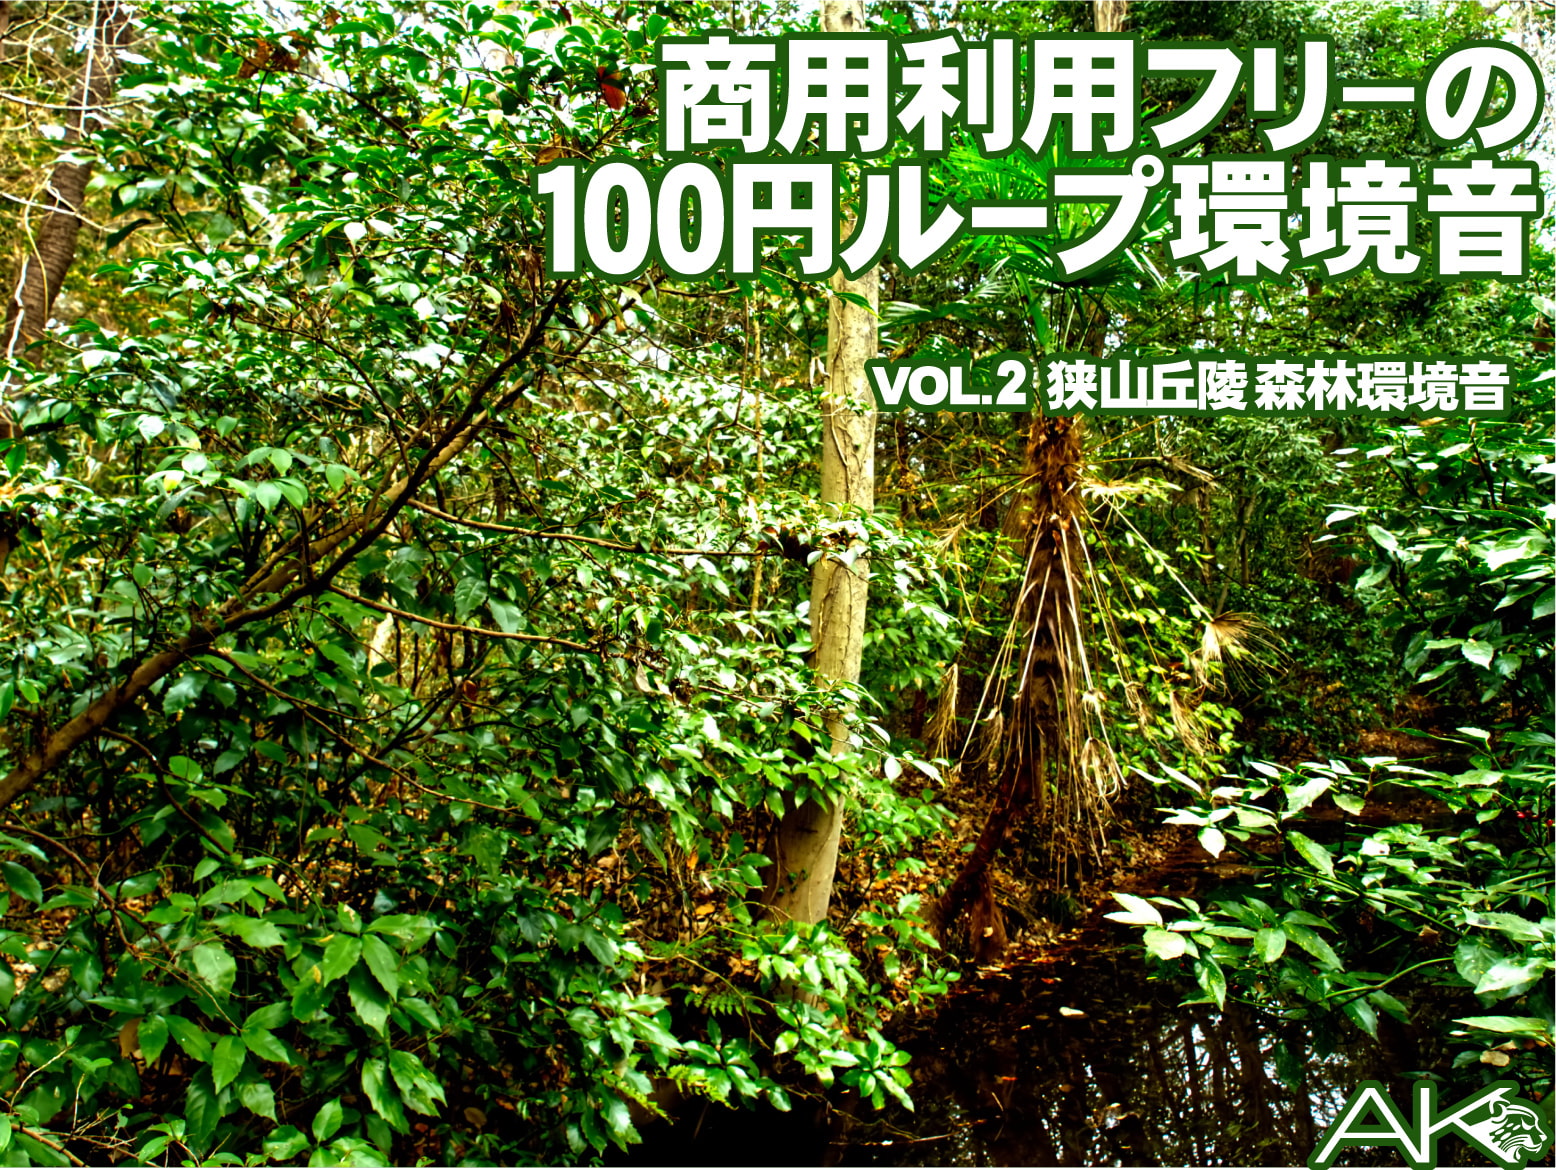 商用利用フリーの100円ループ環境音 VOL.2 森林環境音(録音地:埼玉県狭山丘陵)1